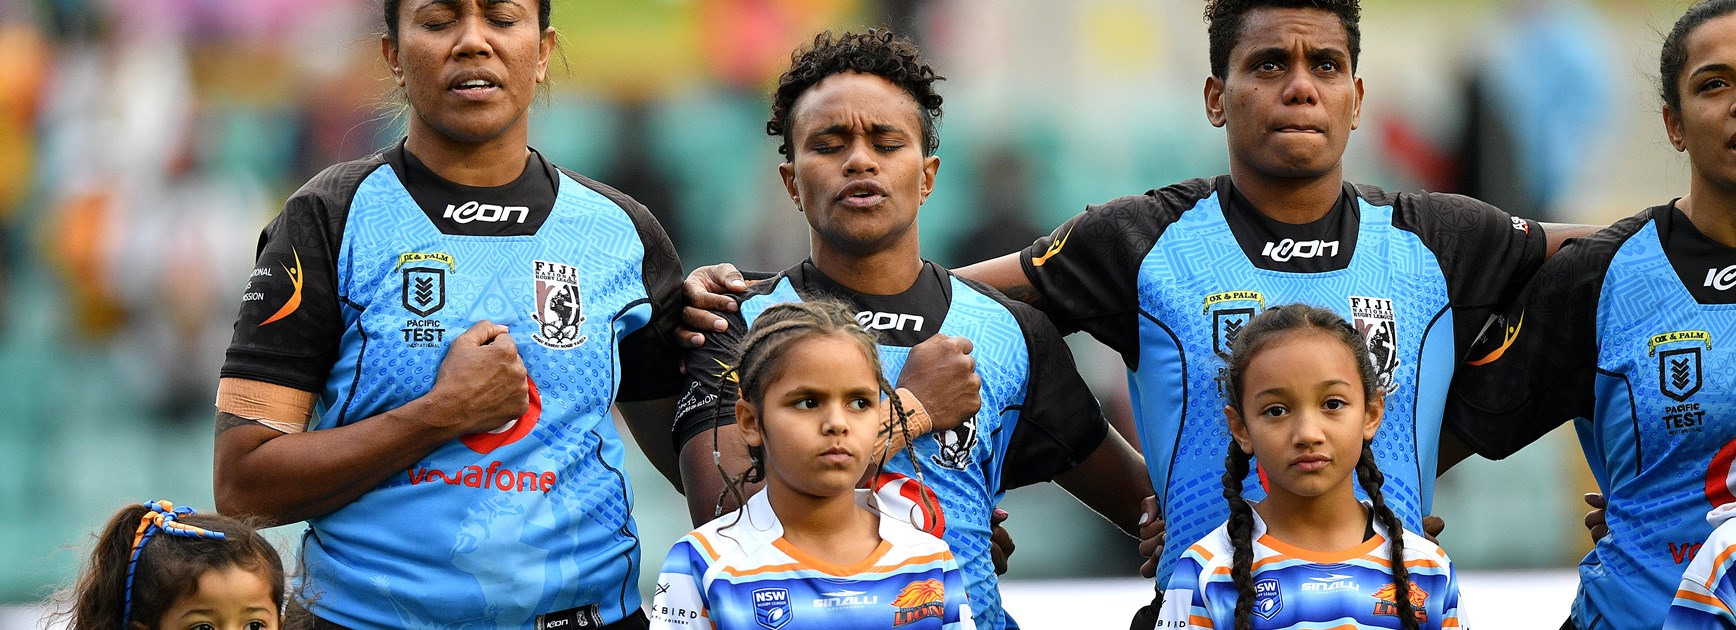 'Big dreams ahead': Fiji announce captain, coach, World Cup ambitions